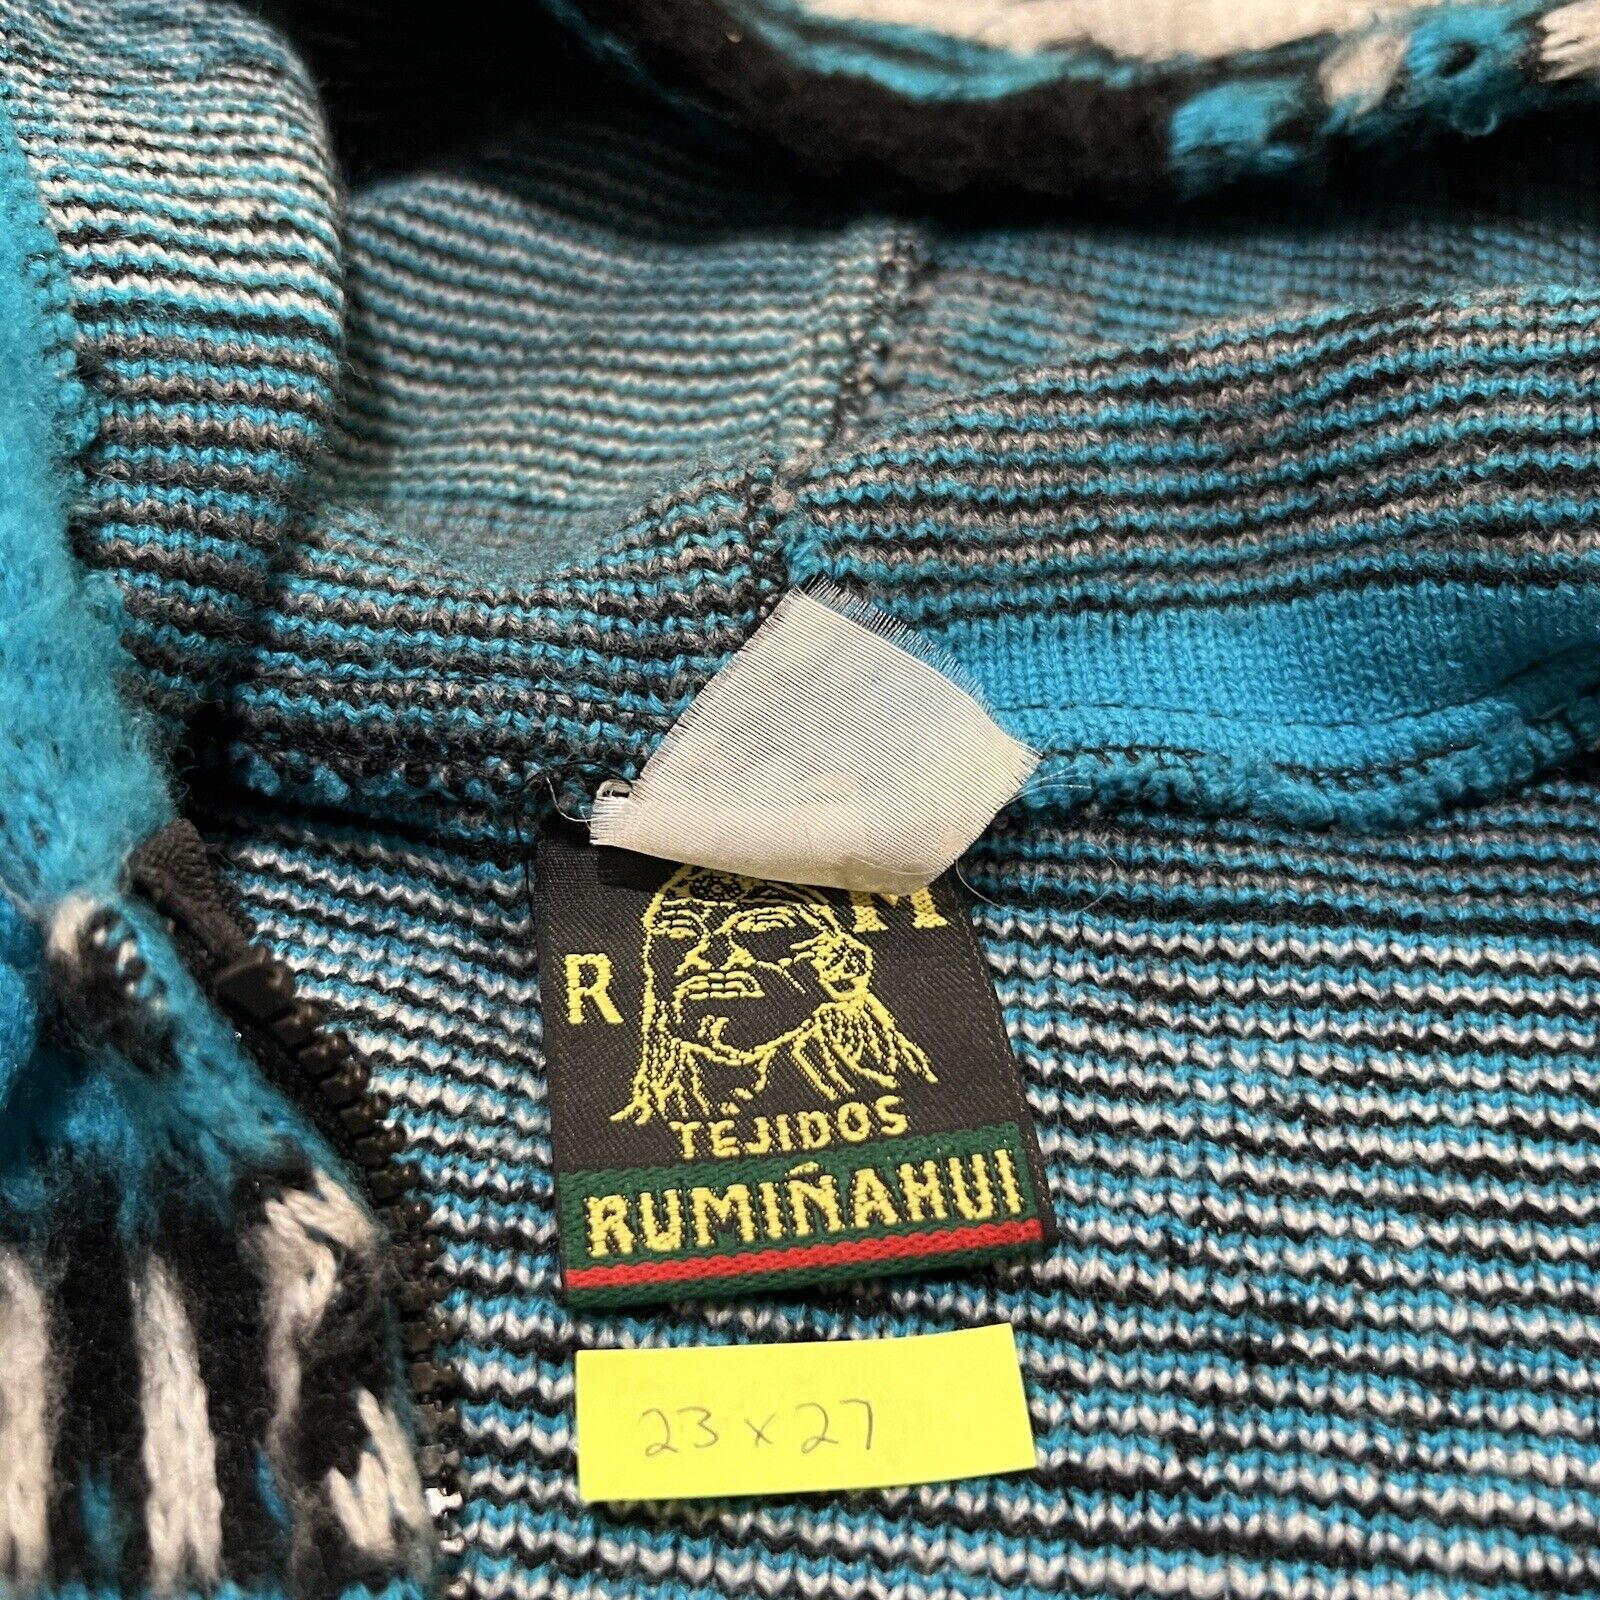 VTG Tejidos Ruminahui Teal Blue Fuzzy Alpaca Wool… - image 6